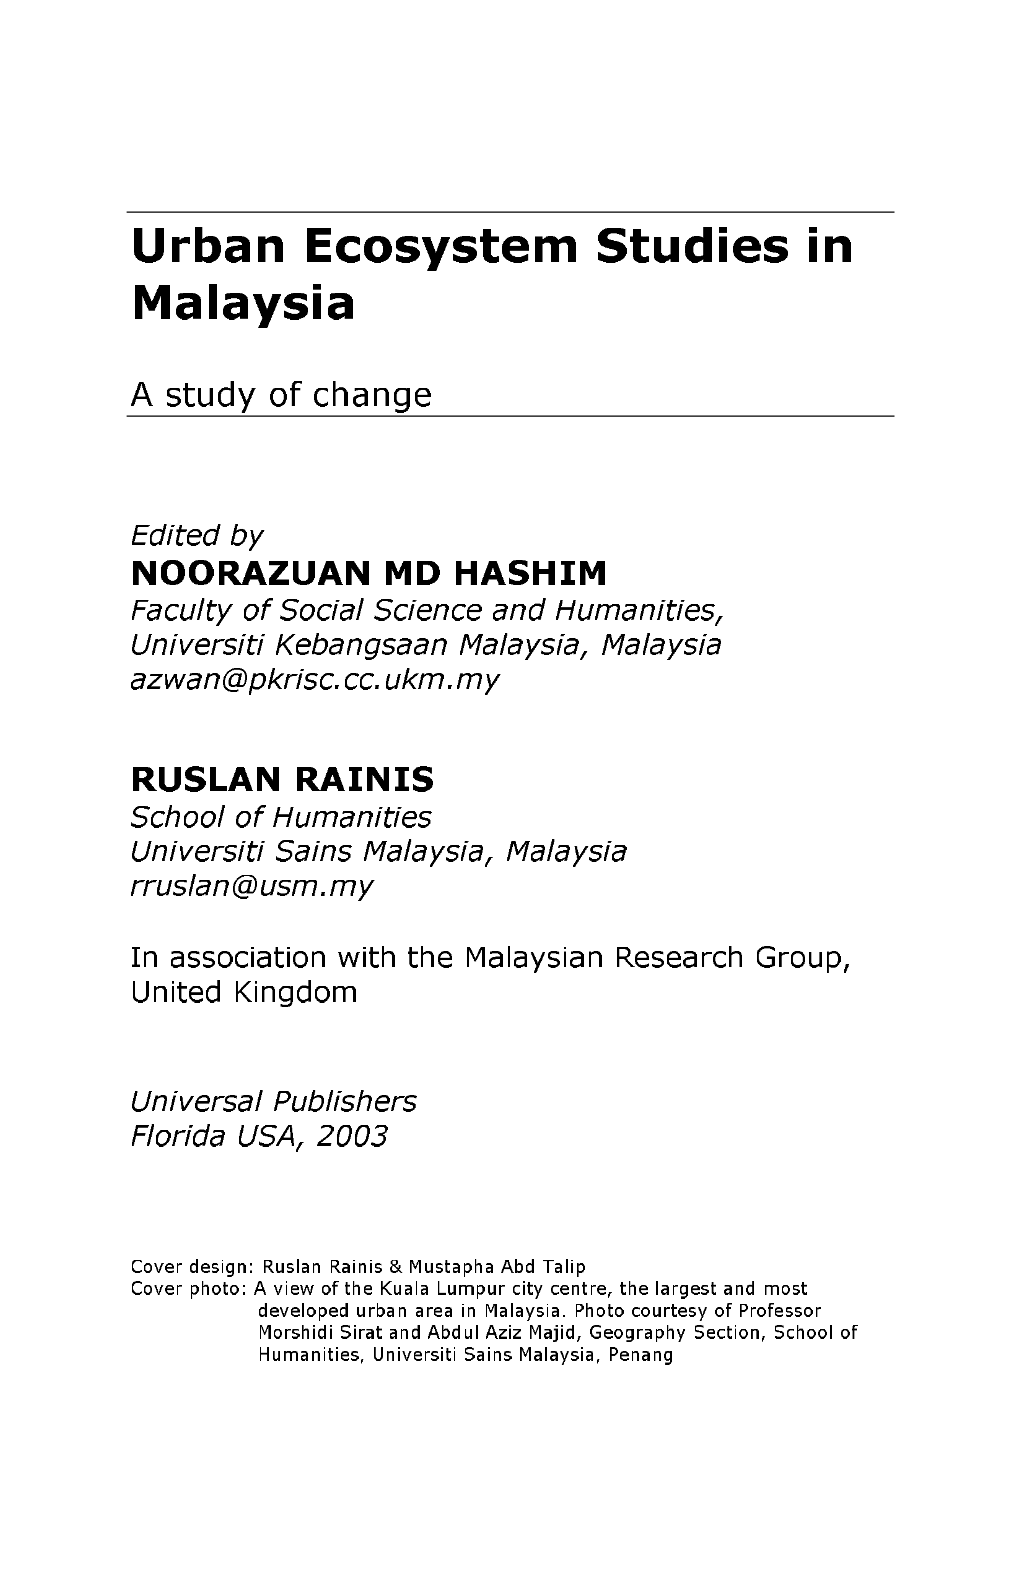 Urban Ecosystem Studies in Malaysia